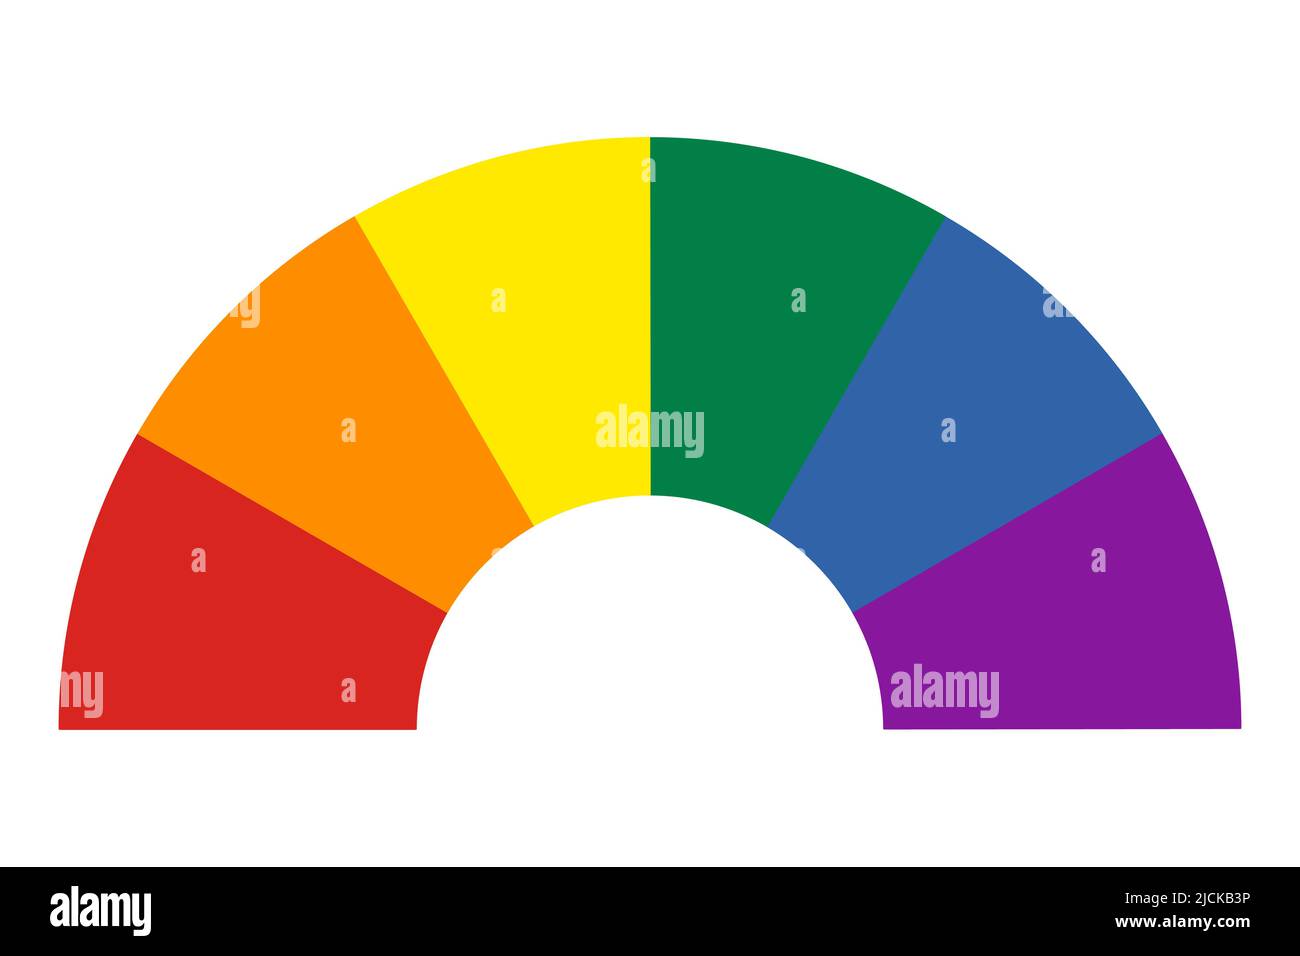 Regenbogen-Symbol mit Farben Sektorstil. Gemeinschaft mit der Pride-Flagge. Vektorgrafik Stock Vektor